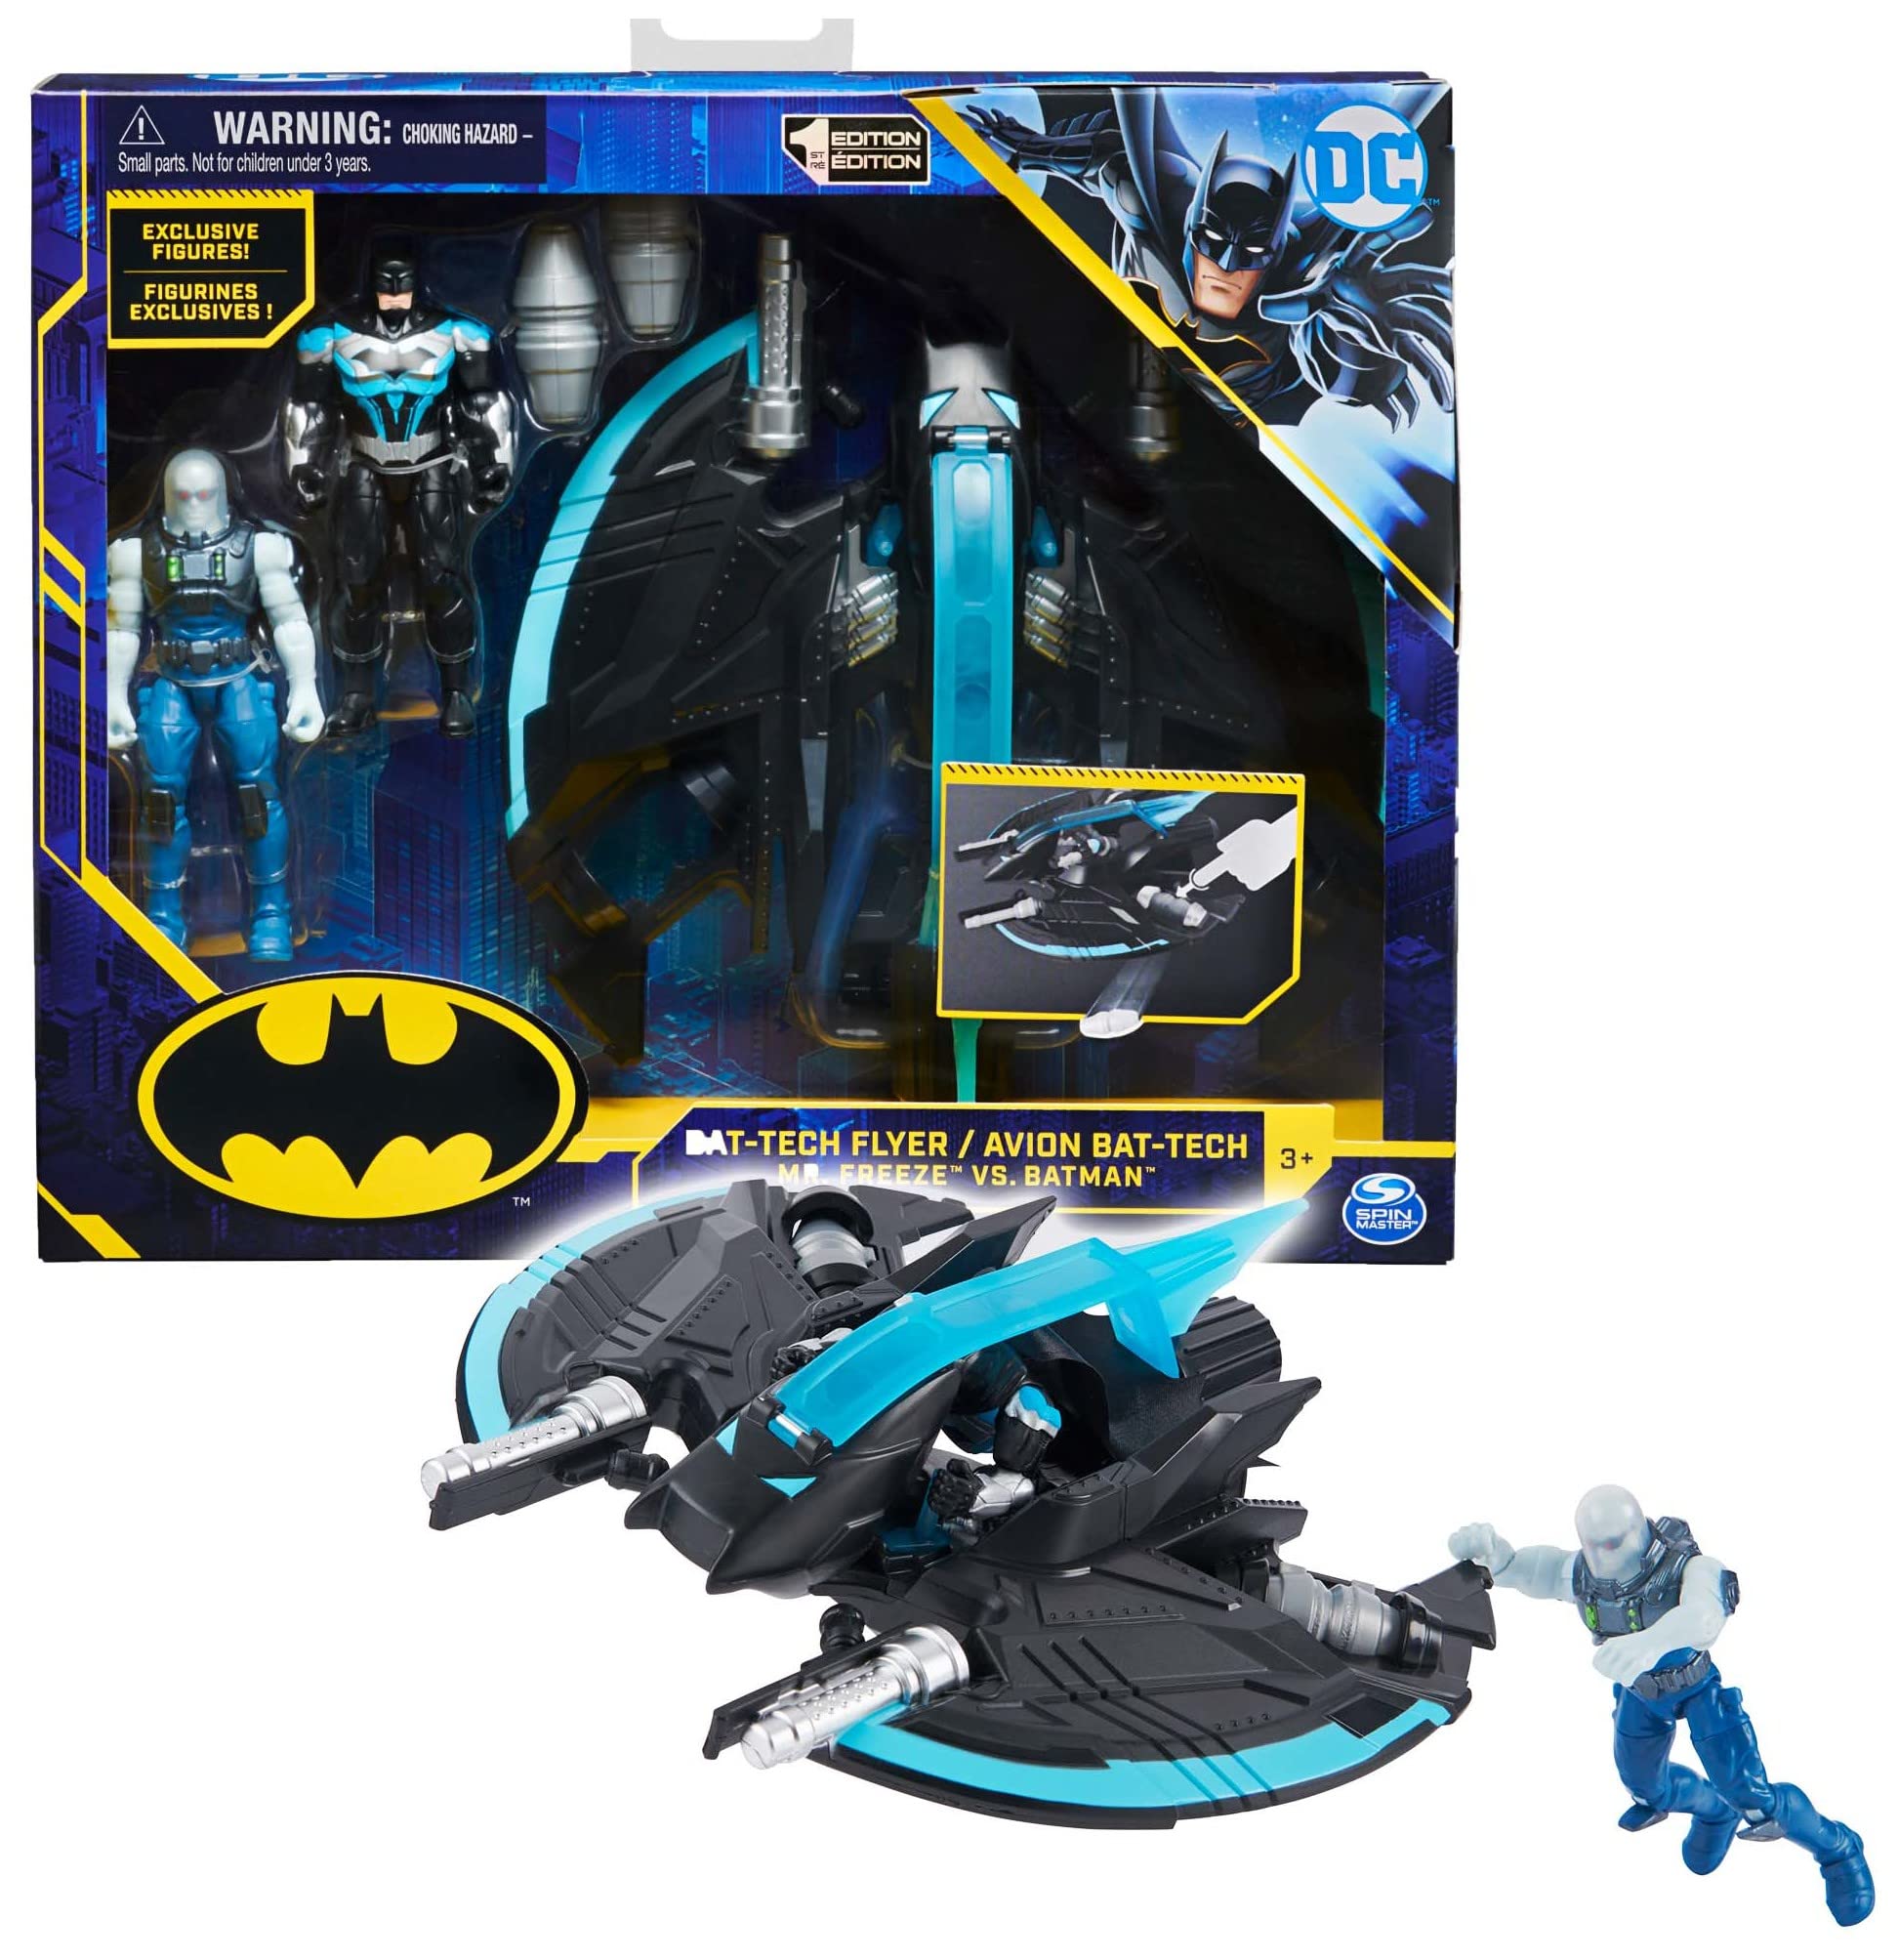 Mua DC Comics Batman Bat-Tech Flyer with 4-inch Exclusive Mr. Freeze and  Batman Action Figures, Kids Toys for Boys Ages 3 and Up trên Amazon Anh  chính hãng 2023 | Giaonhan247